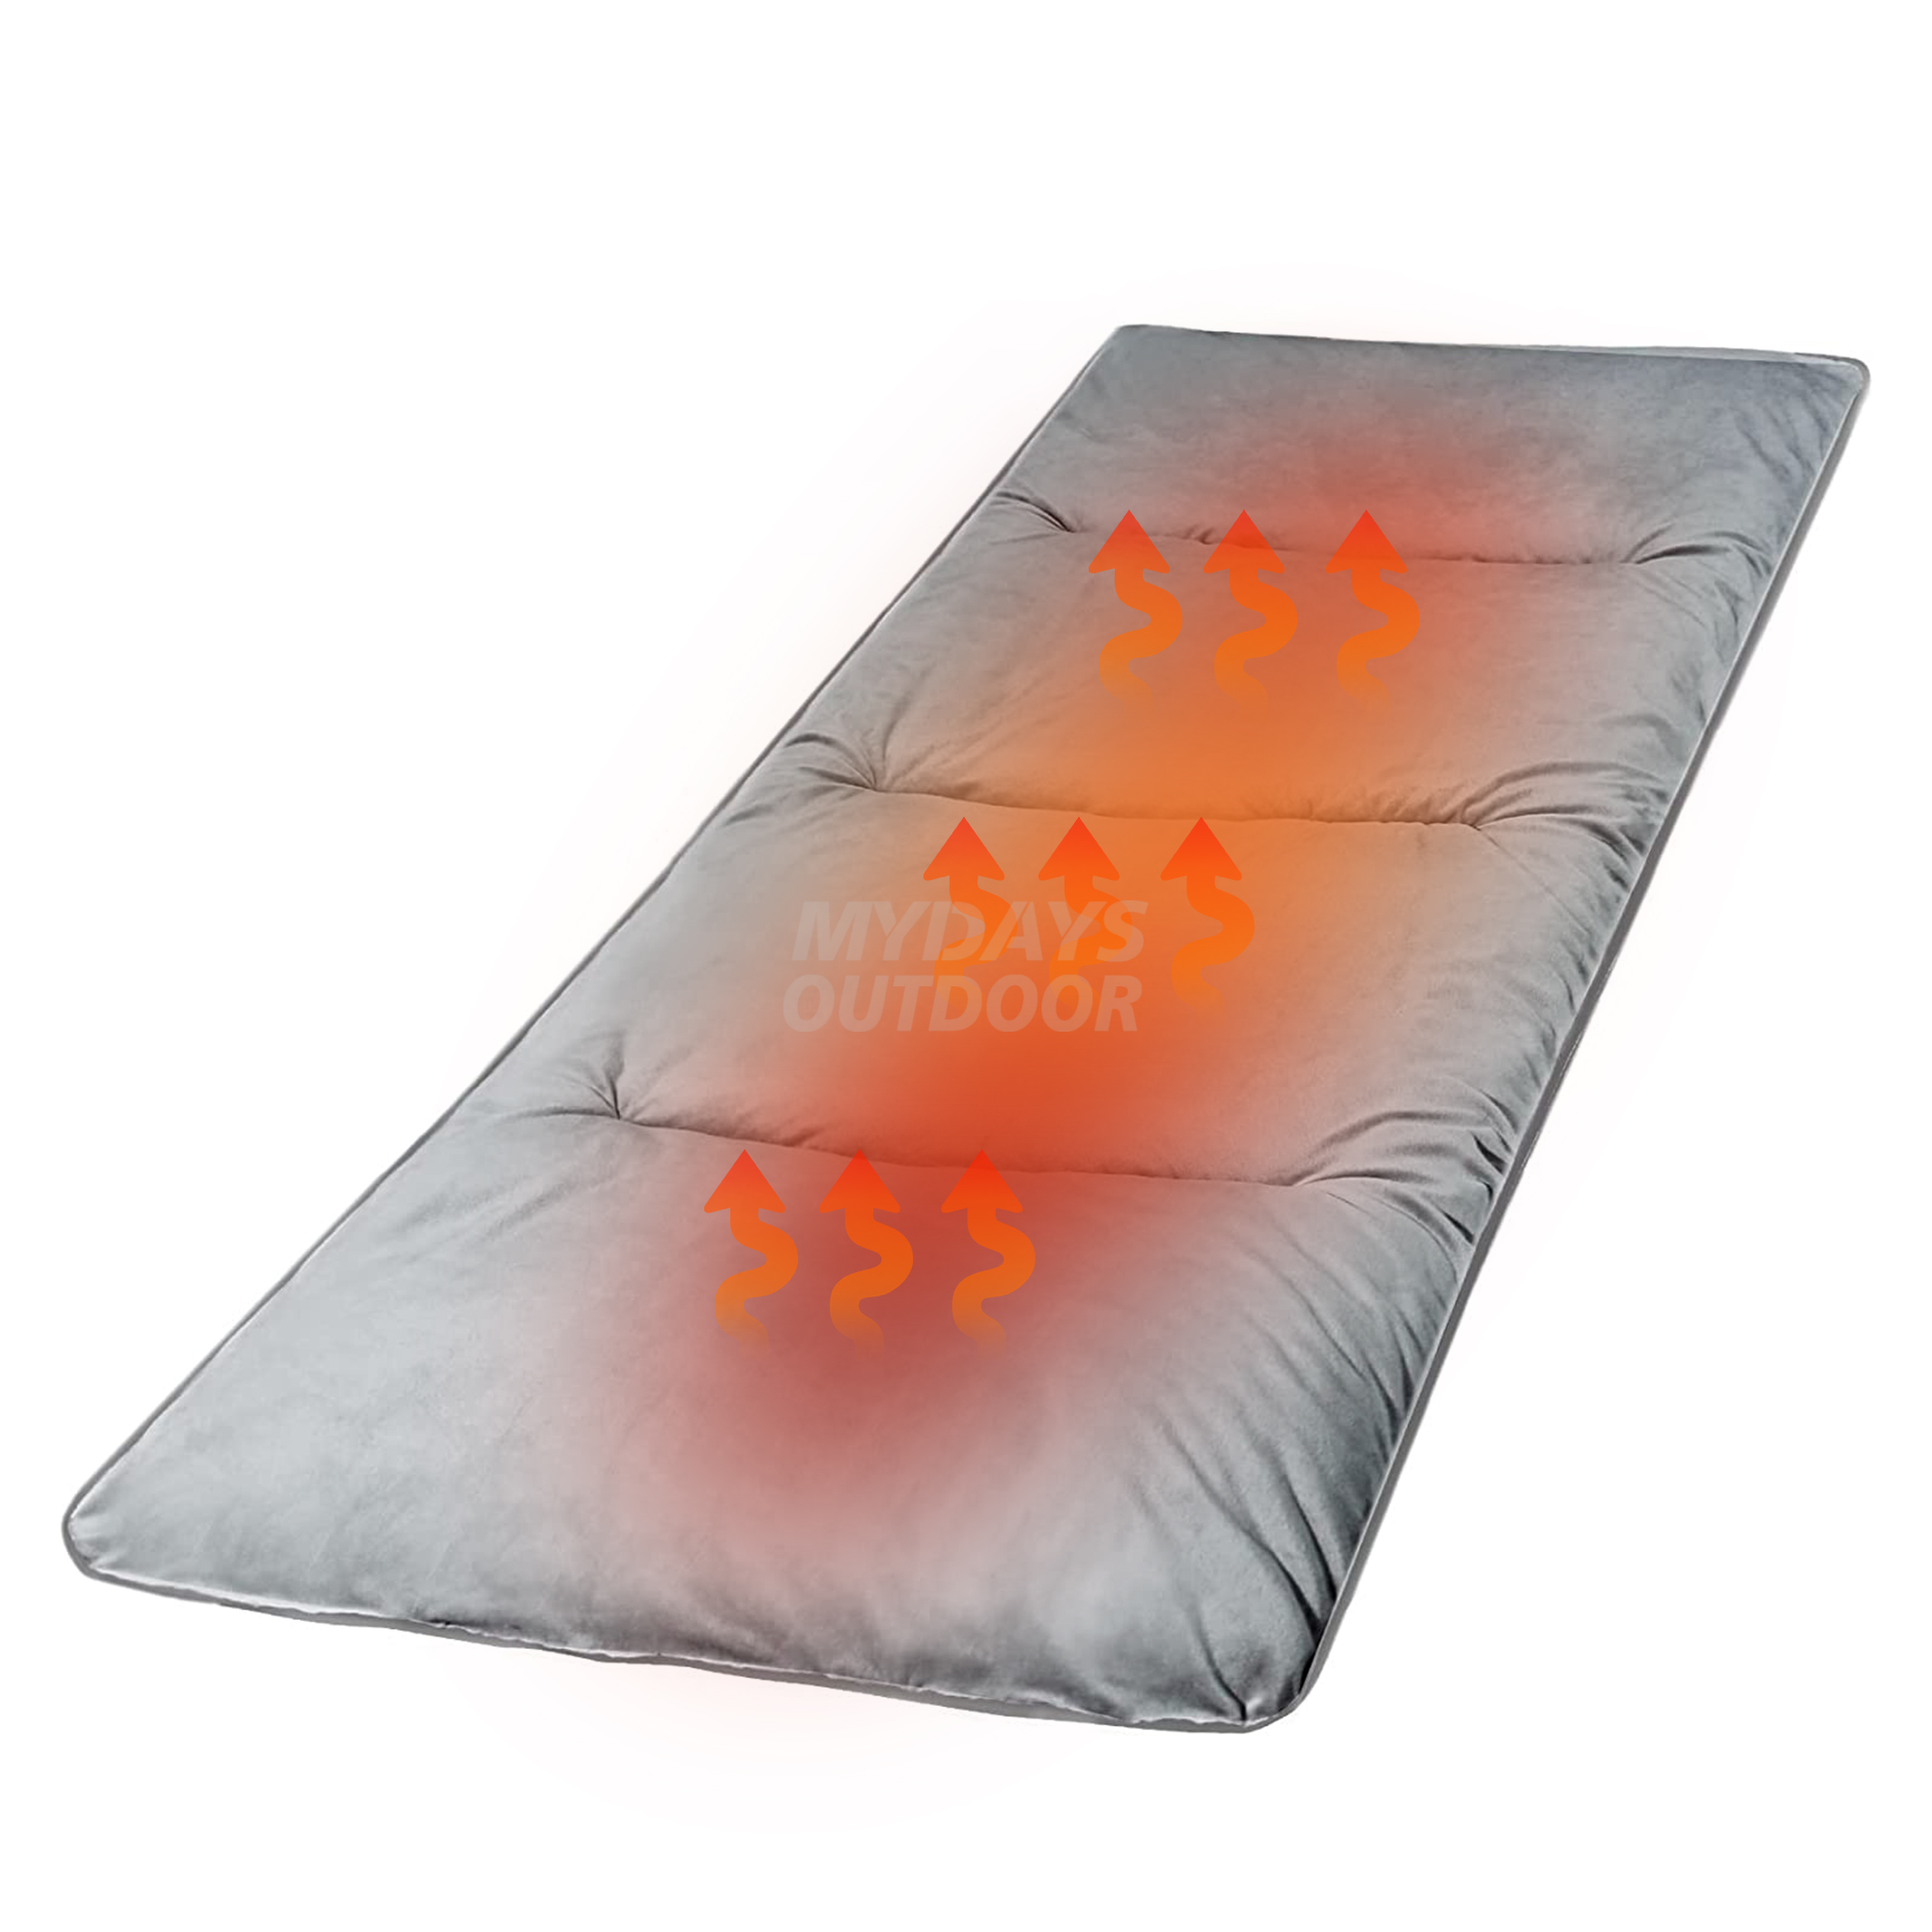 Camping Cot Pads Heated Soft Comfortable Cotton Sleeping Cot Mattress Pad MDSCM-30